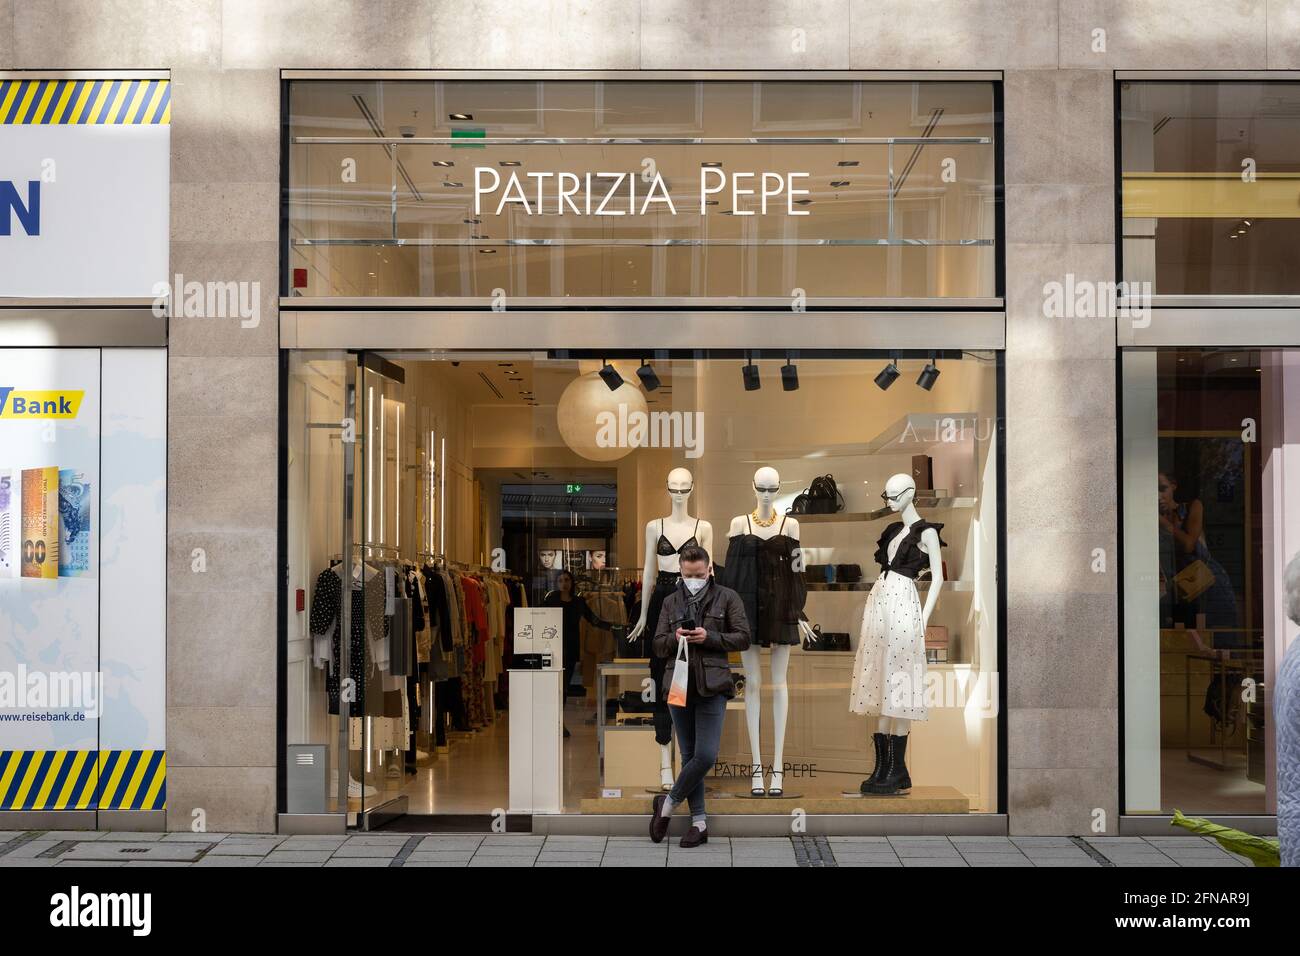 Patrizia Pepe store sign in Munich town center Stock Photo - Alamy